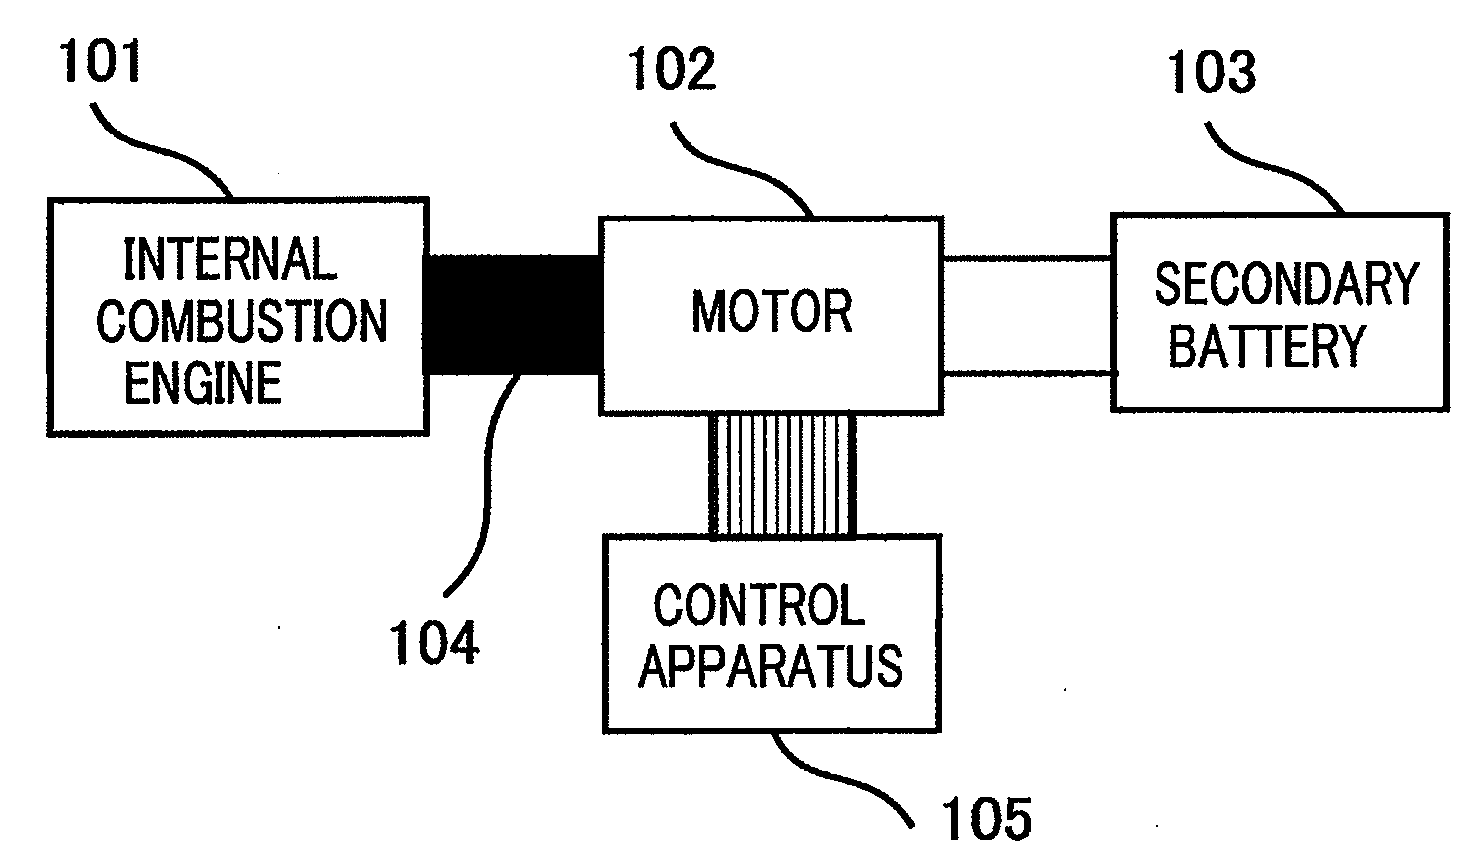 Vehicle motor control apparatus